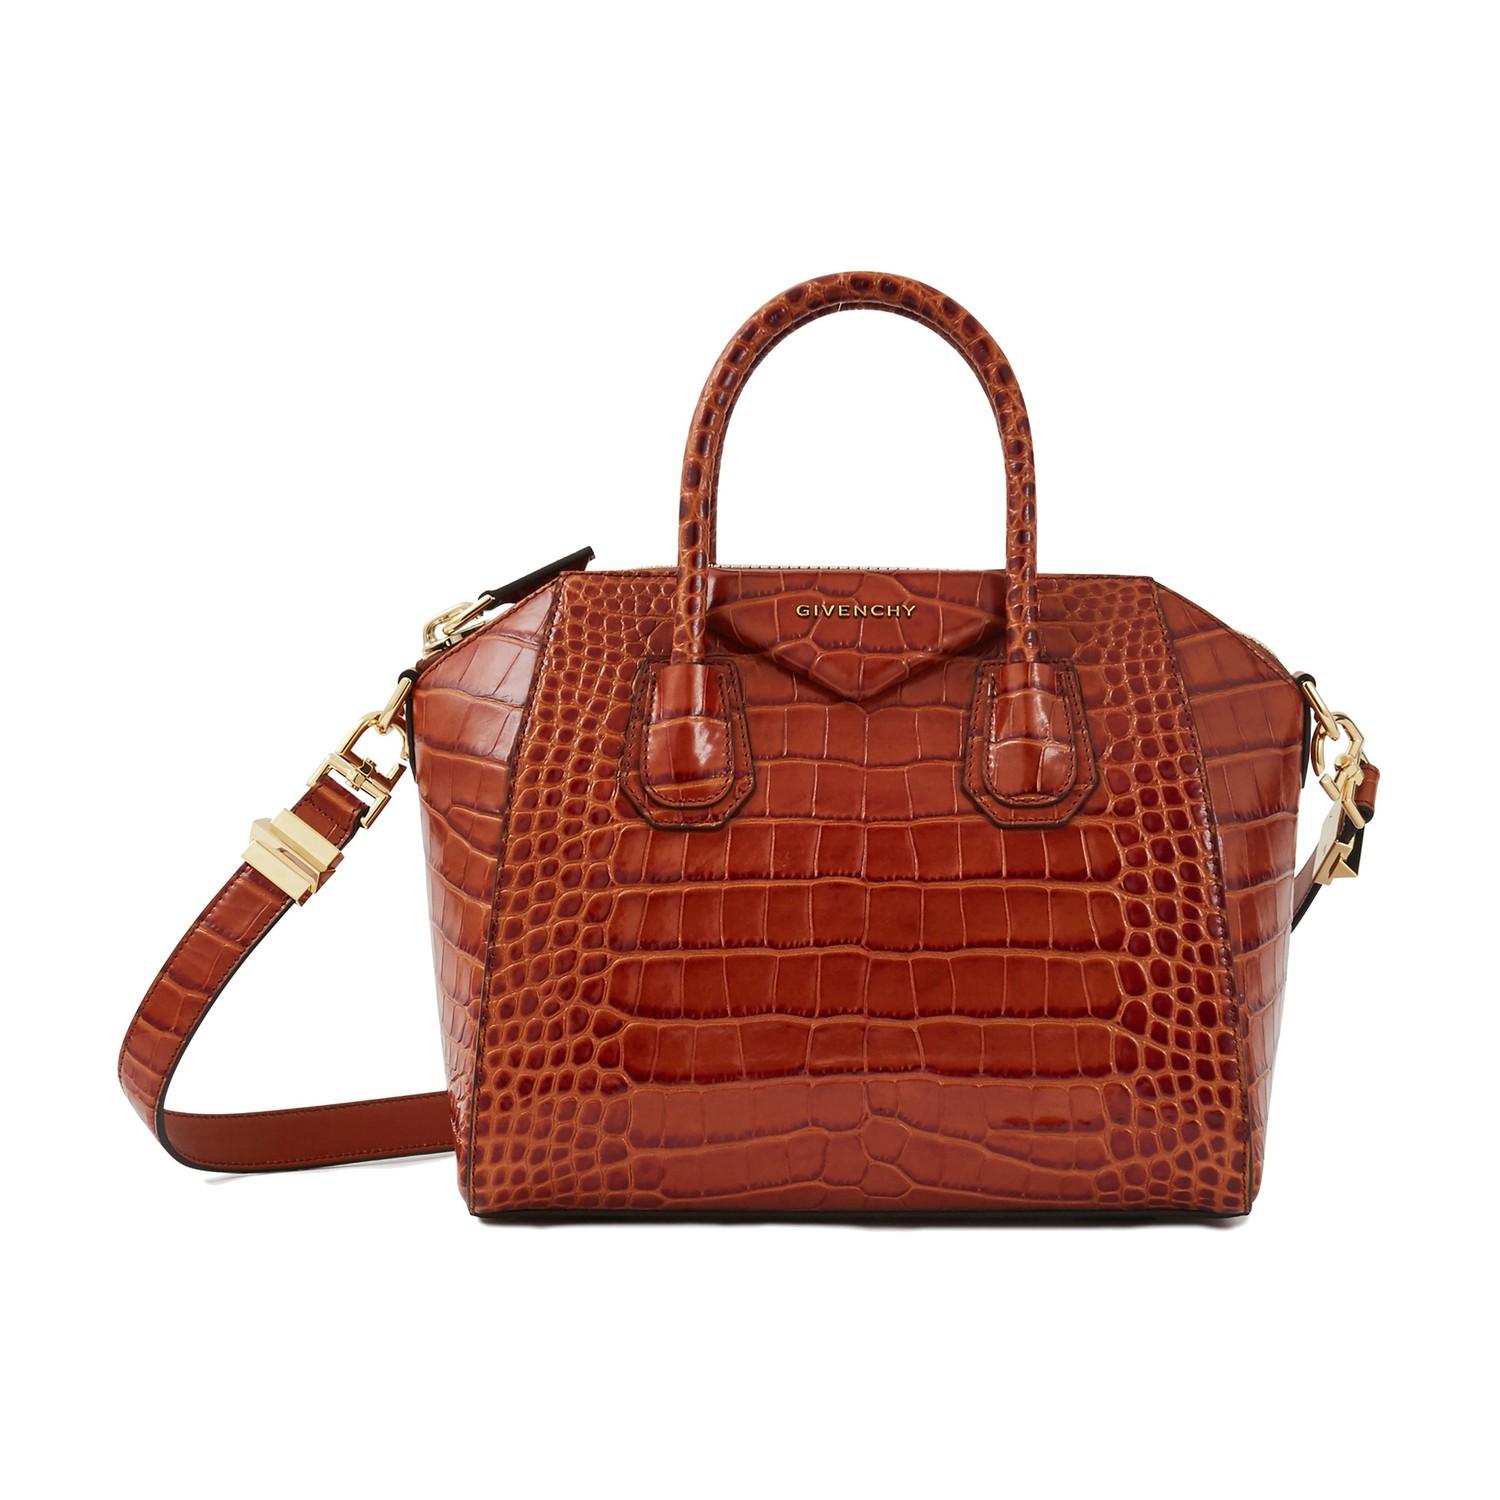 Givenchy Antigona Small Handbag in Cognac (Red) - Lyst